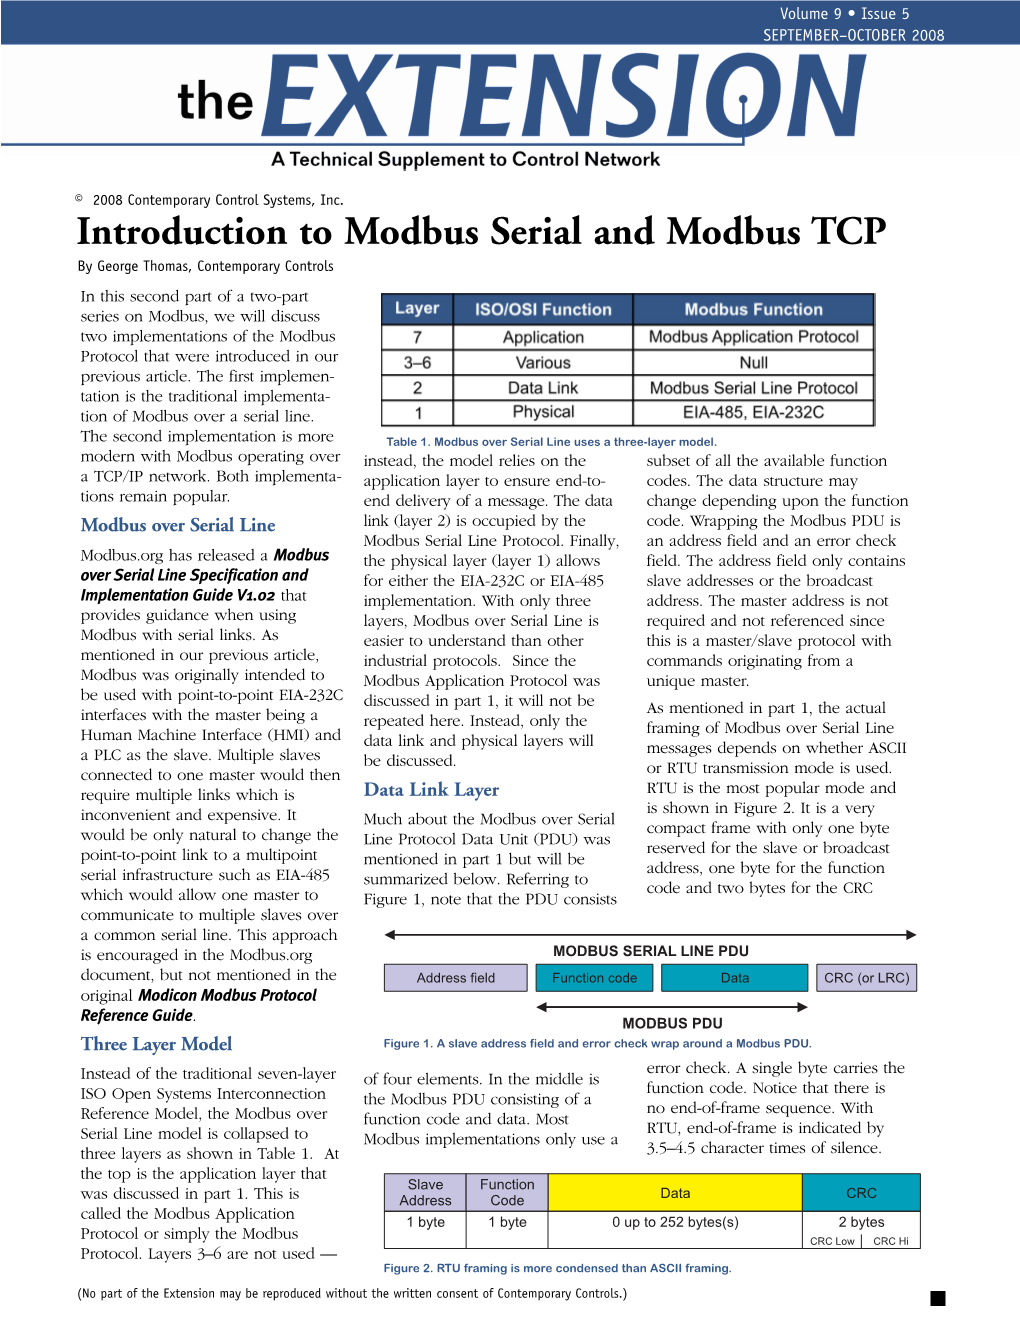 Introduction to Modbus Serial and Modbus